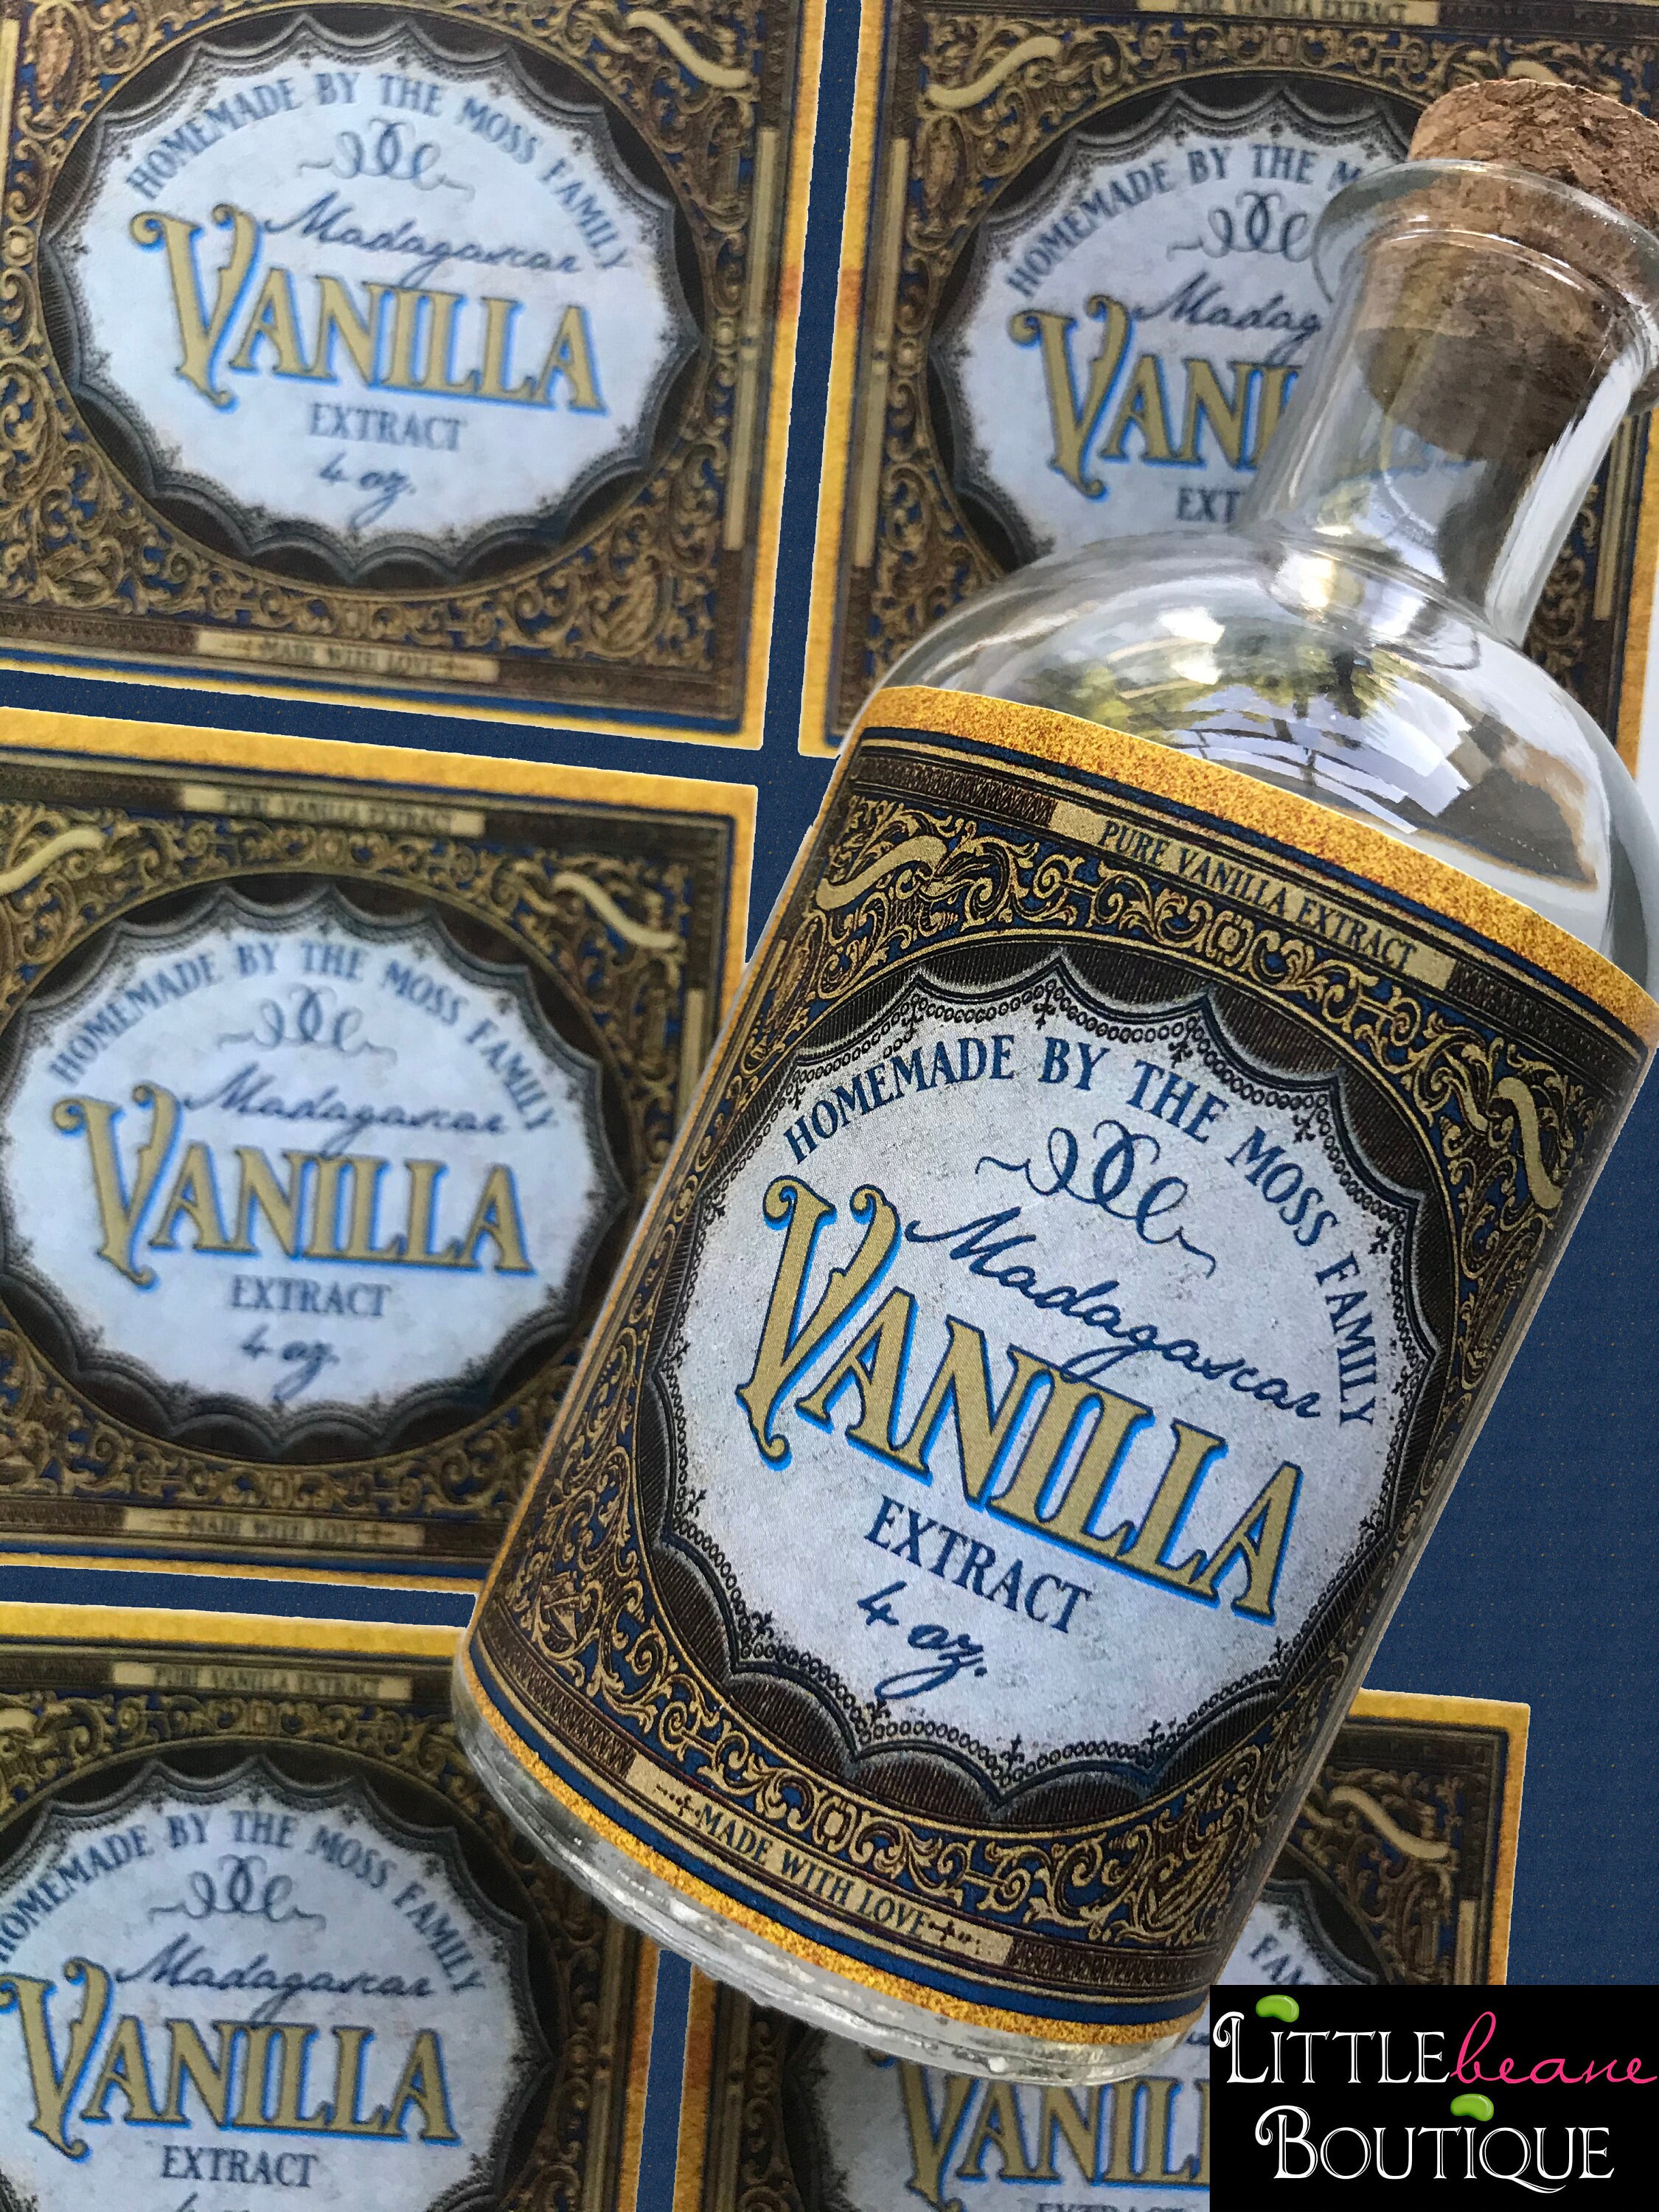 Homemade Vanilla Extract Label – Authentic Heirlooms